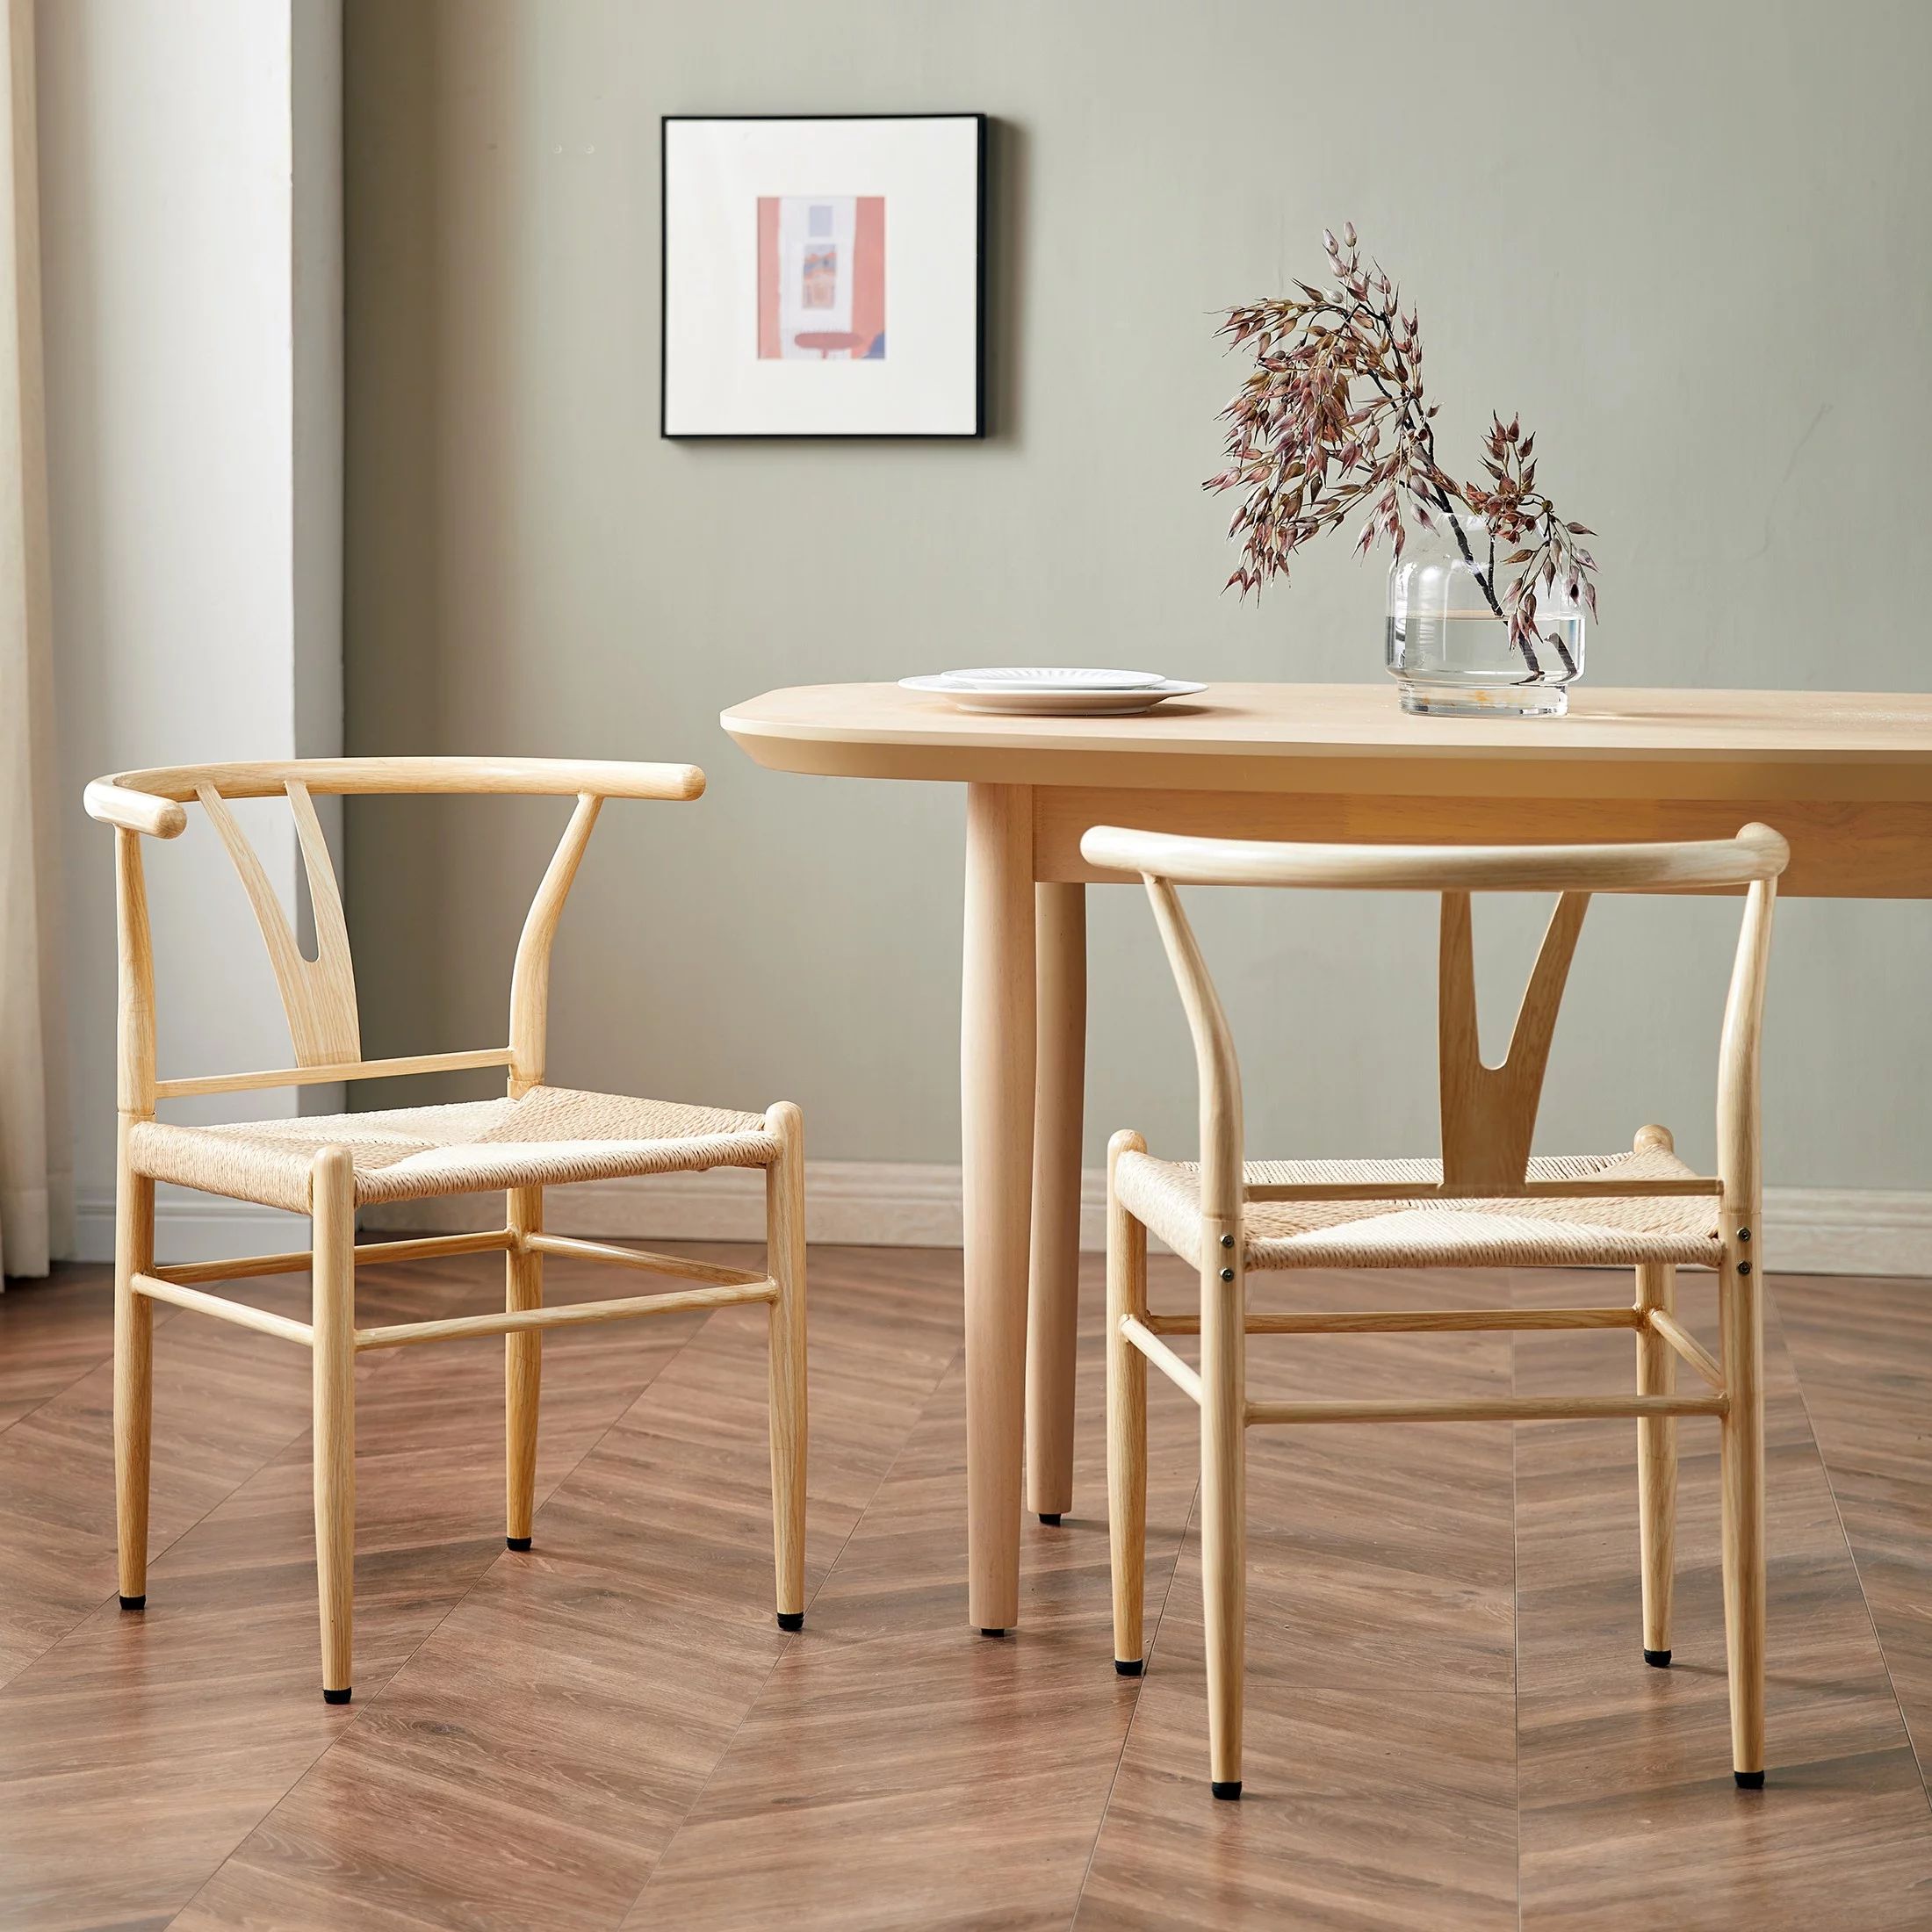 Better Homes & Gardens Springwood Wishbone Chair 2 Pack, Light Natural Color Finish for Indoor | Walmart (US)